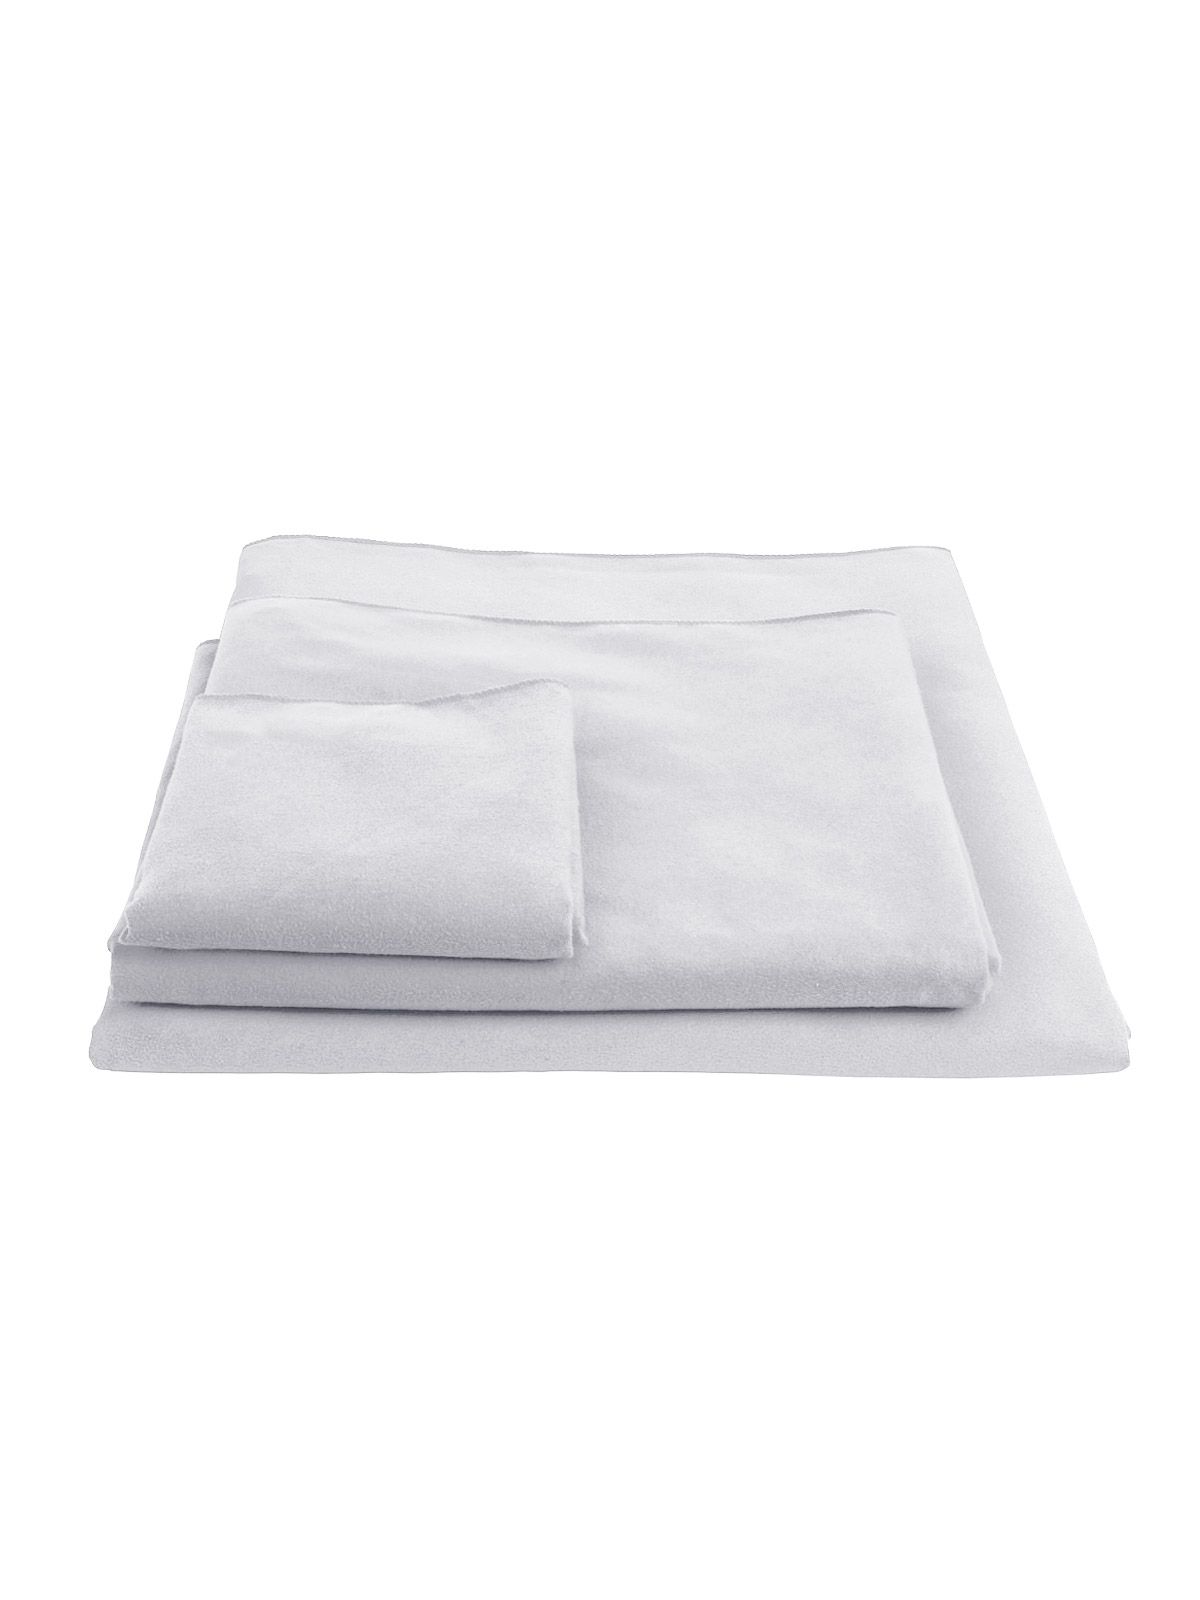 promo-towel-40x90-white.webp